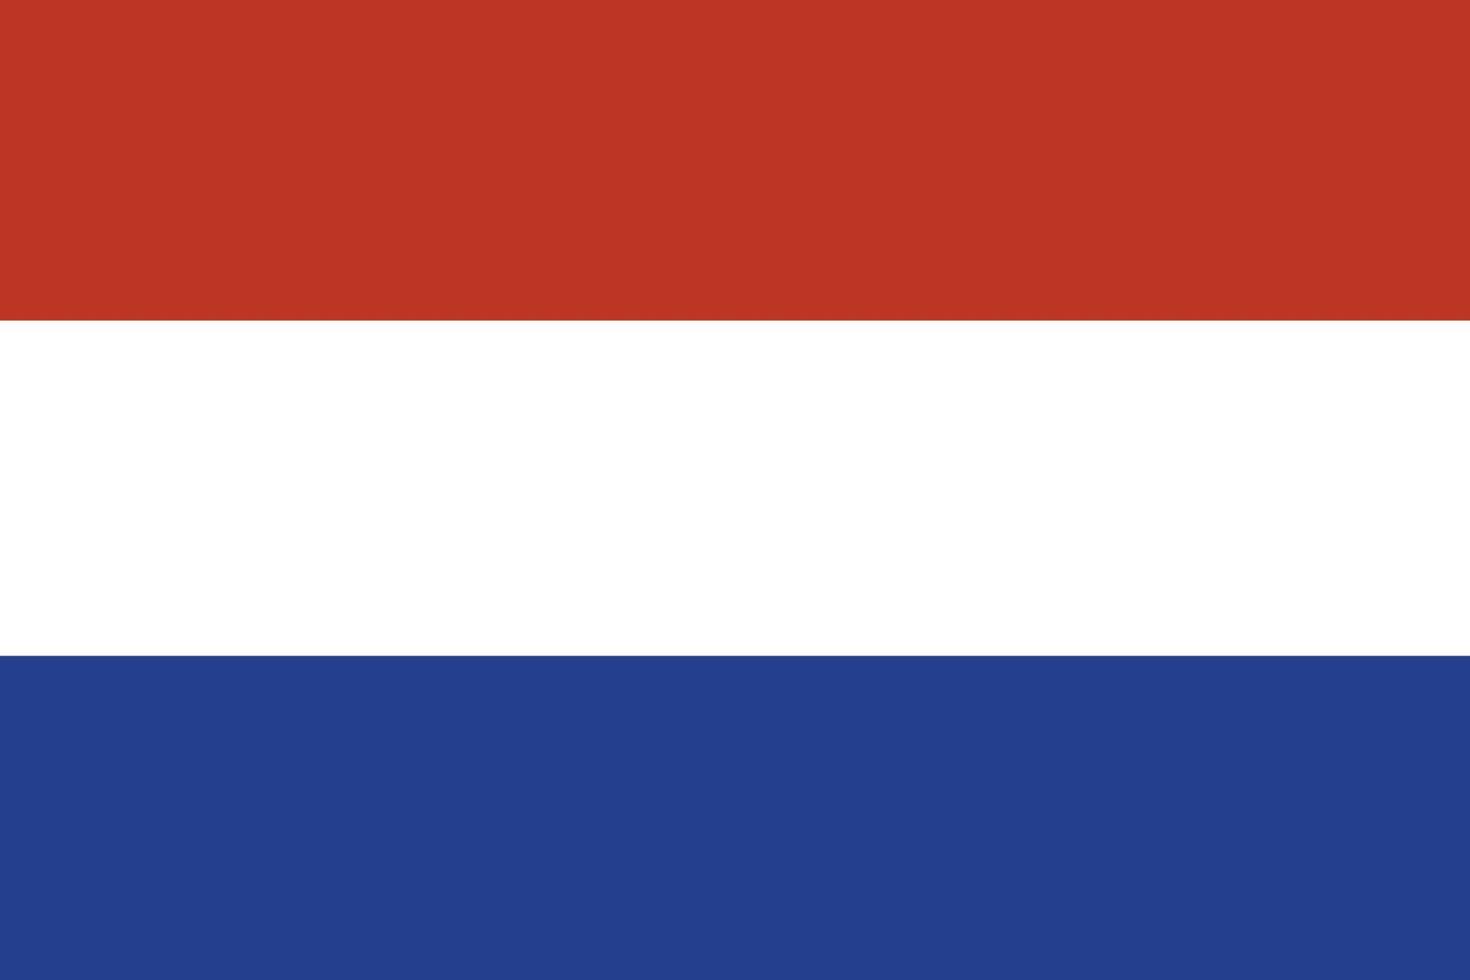 bandeira holandesa. cores e proporções oficiais. bandeira nacional da Holanda. vetor